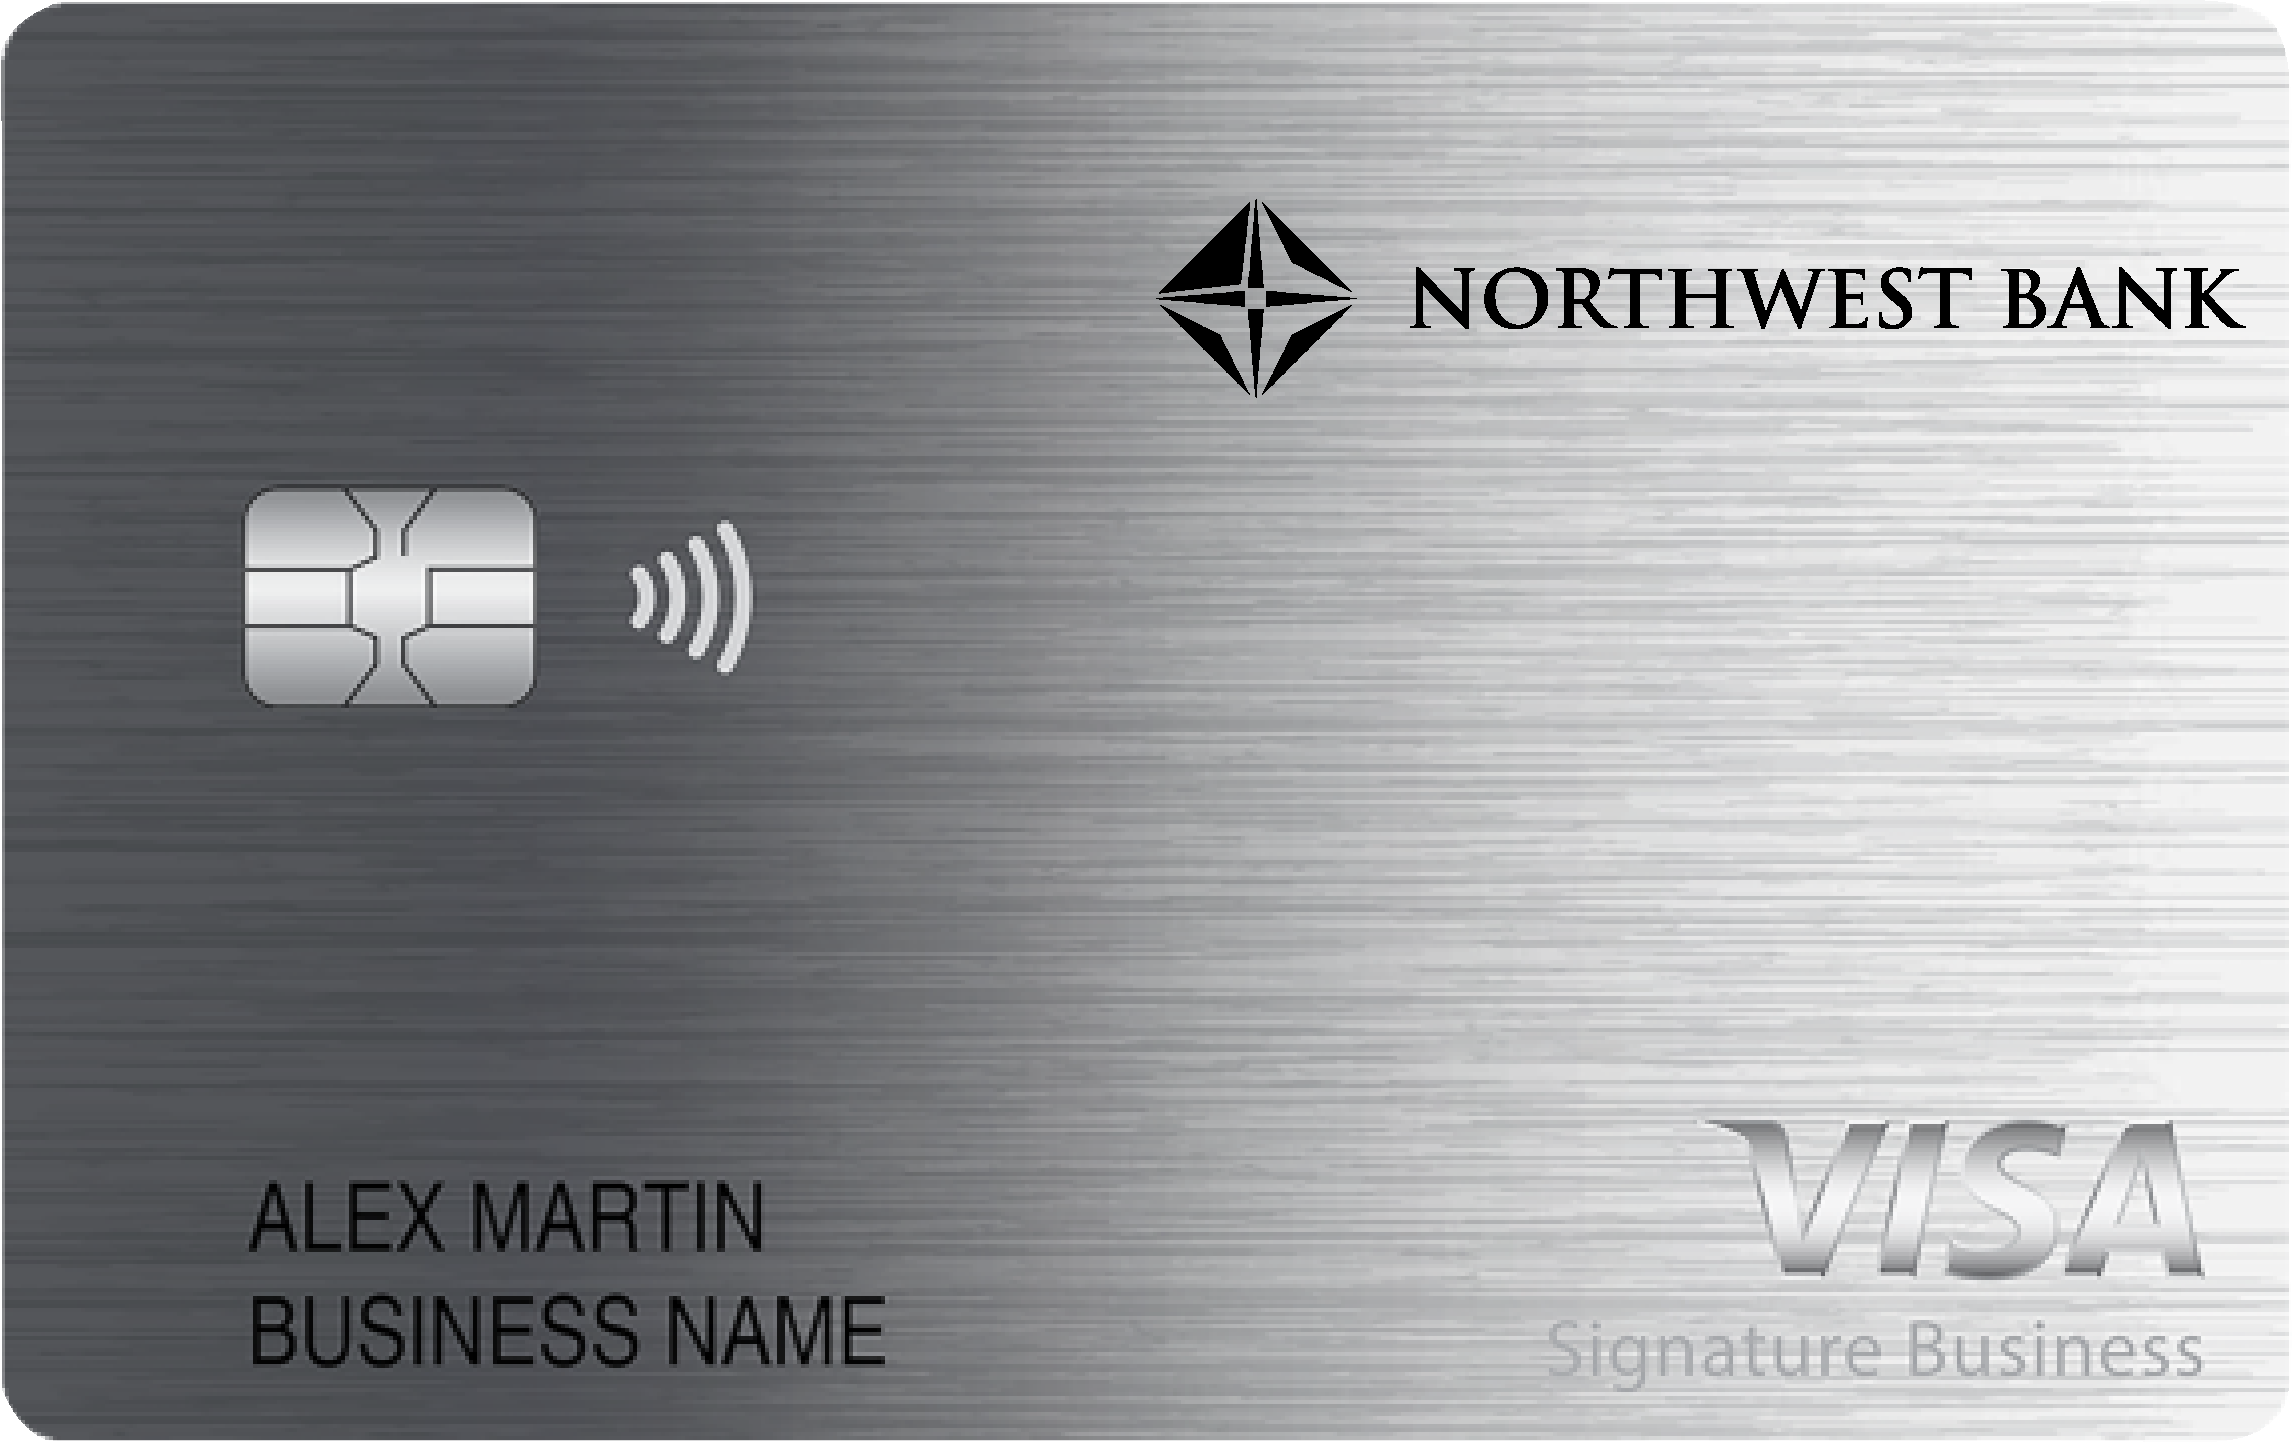 Northwest Bank Smart Business Rewards Card